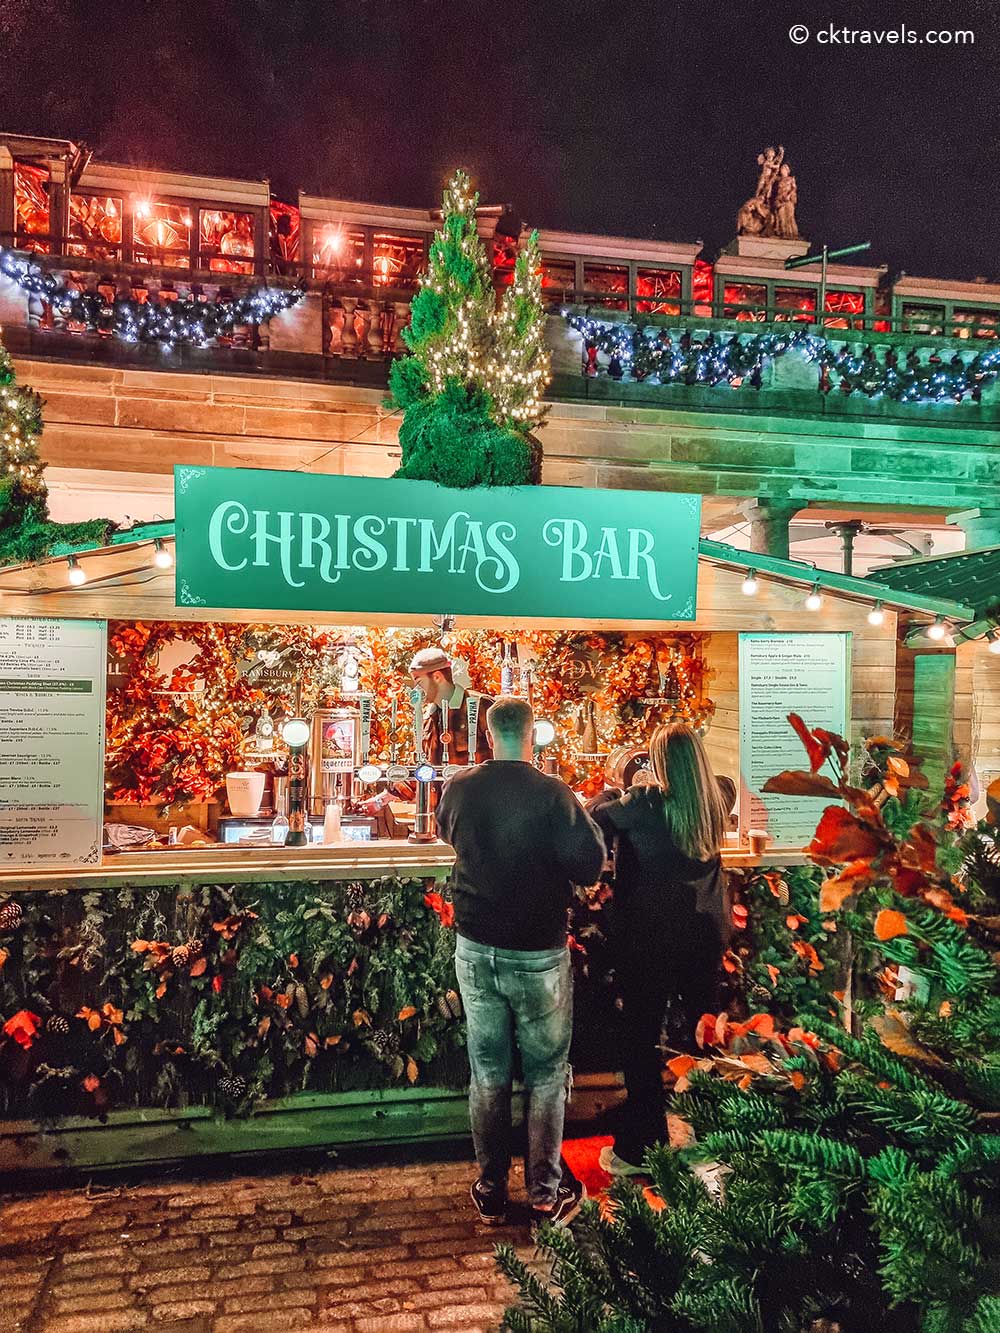 Covent Garden Christmas 2021 market